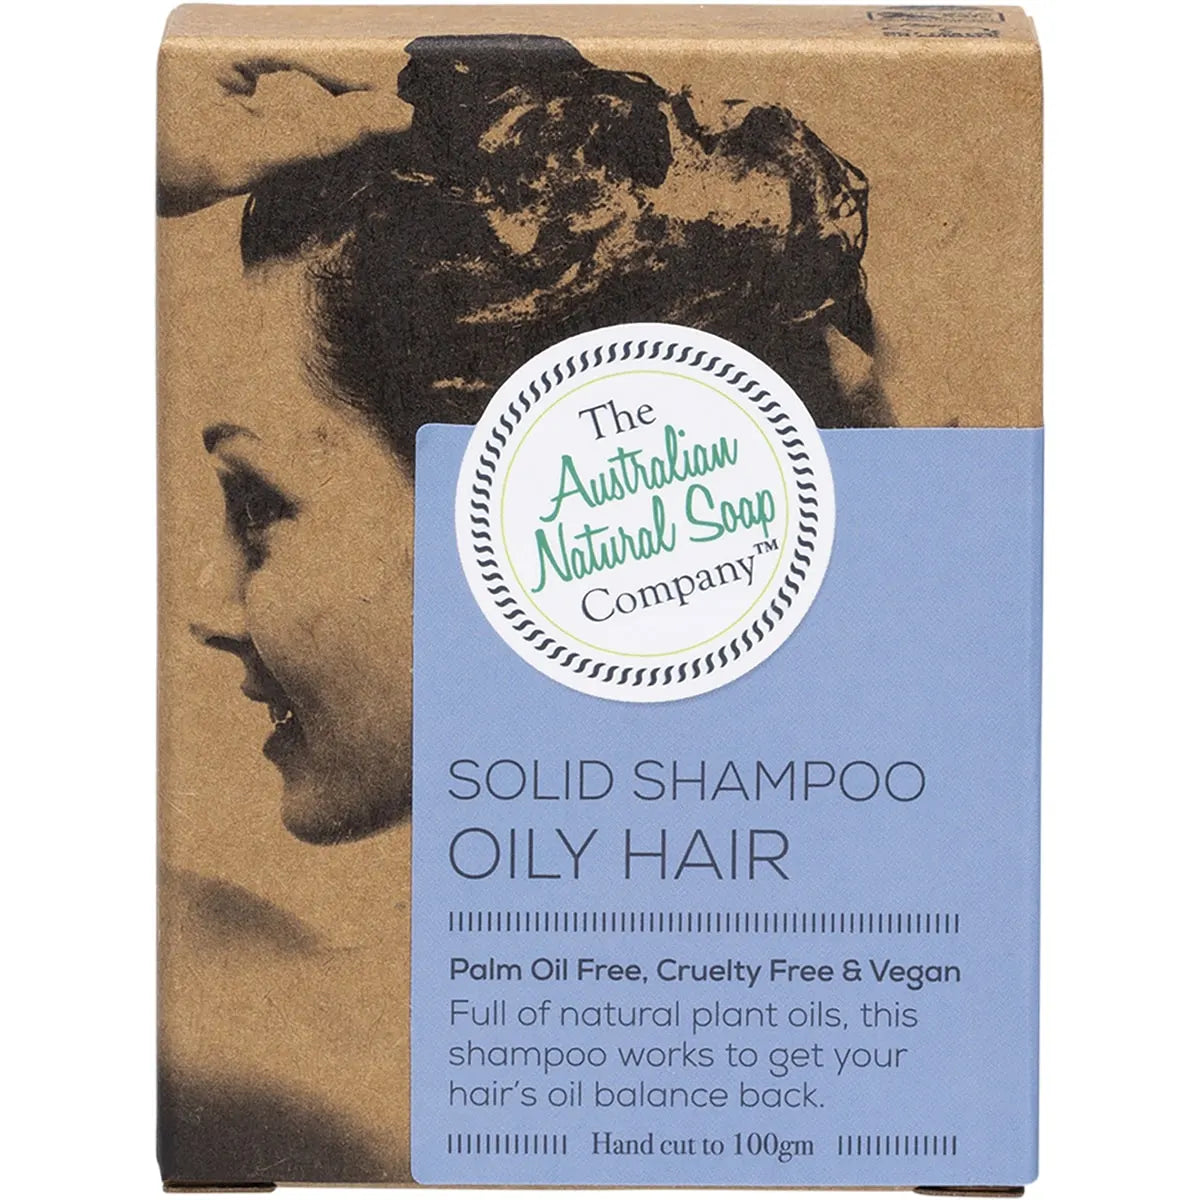 The Australian Natural Soap Company Solid Shampoo Bar Oily Hair 100g